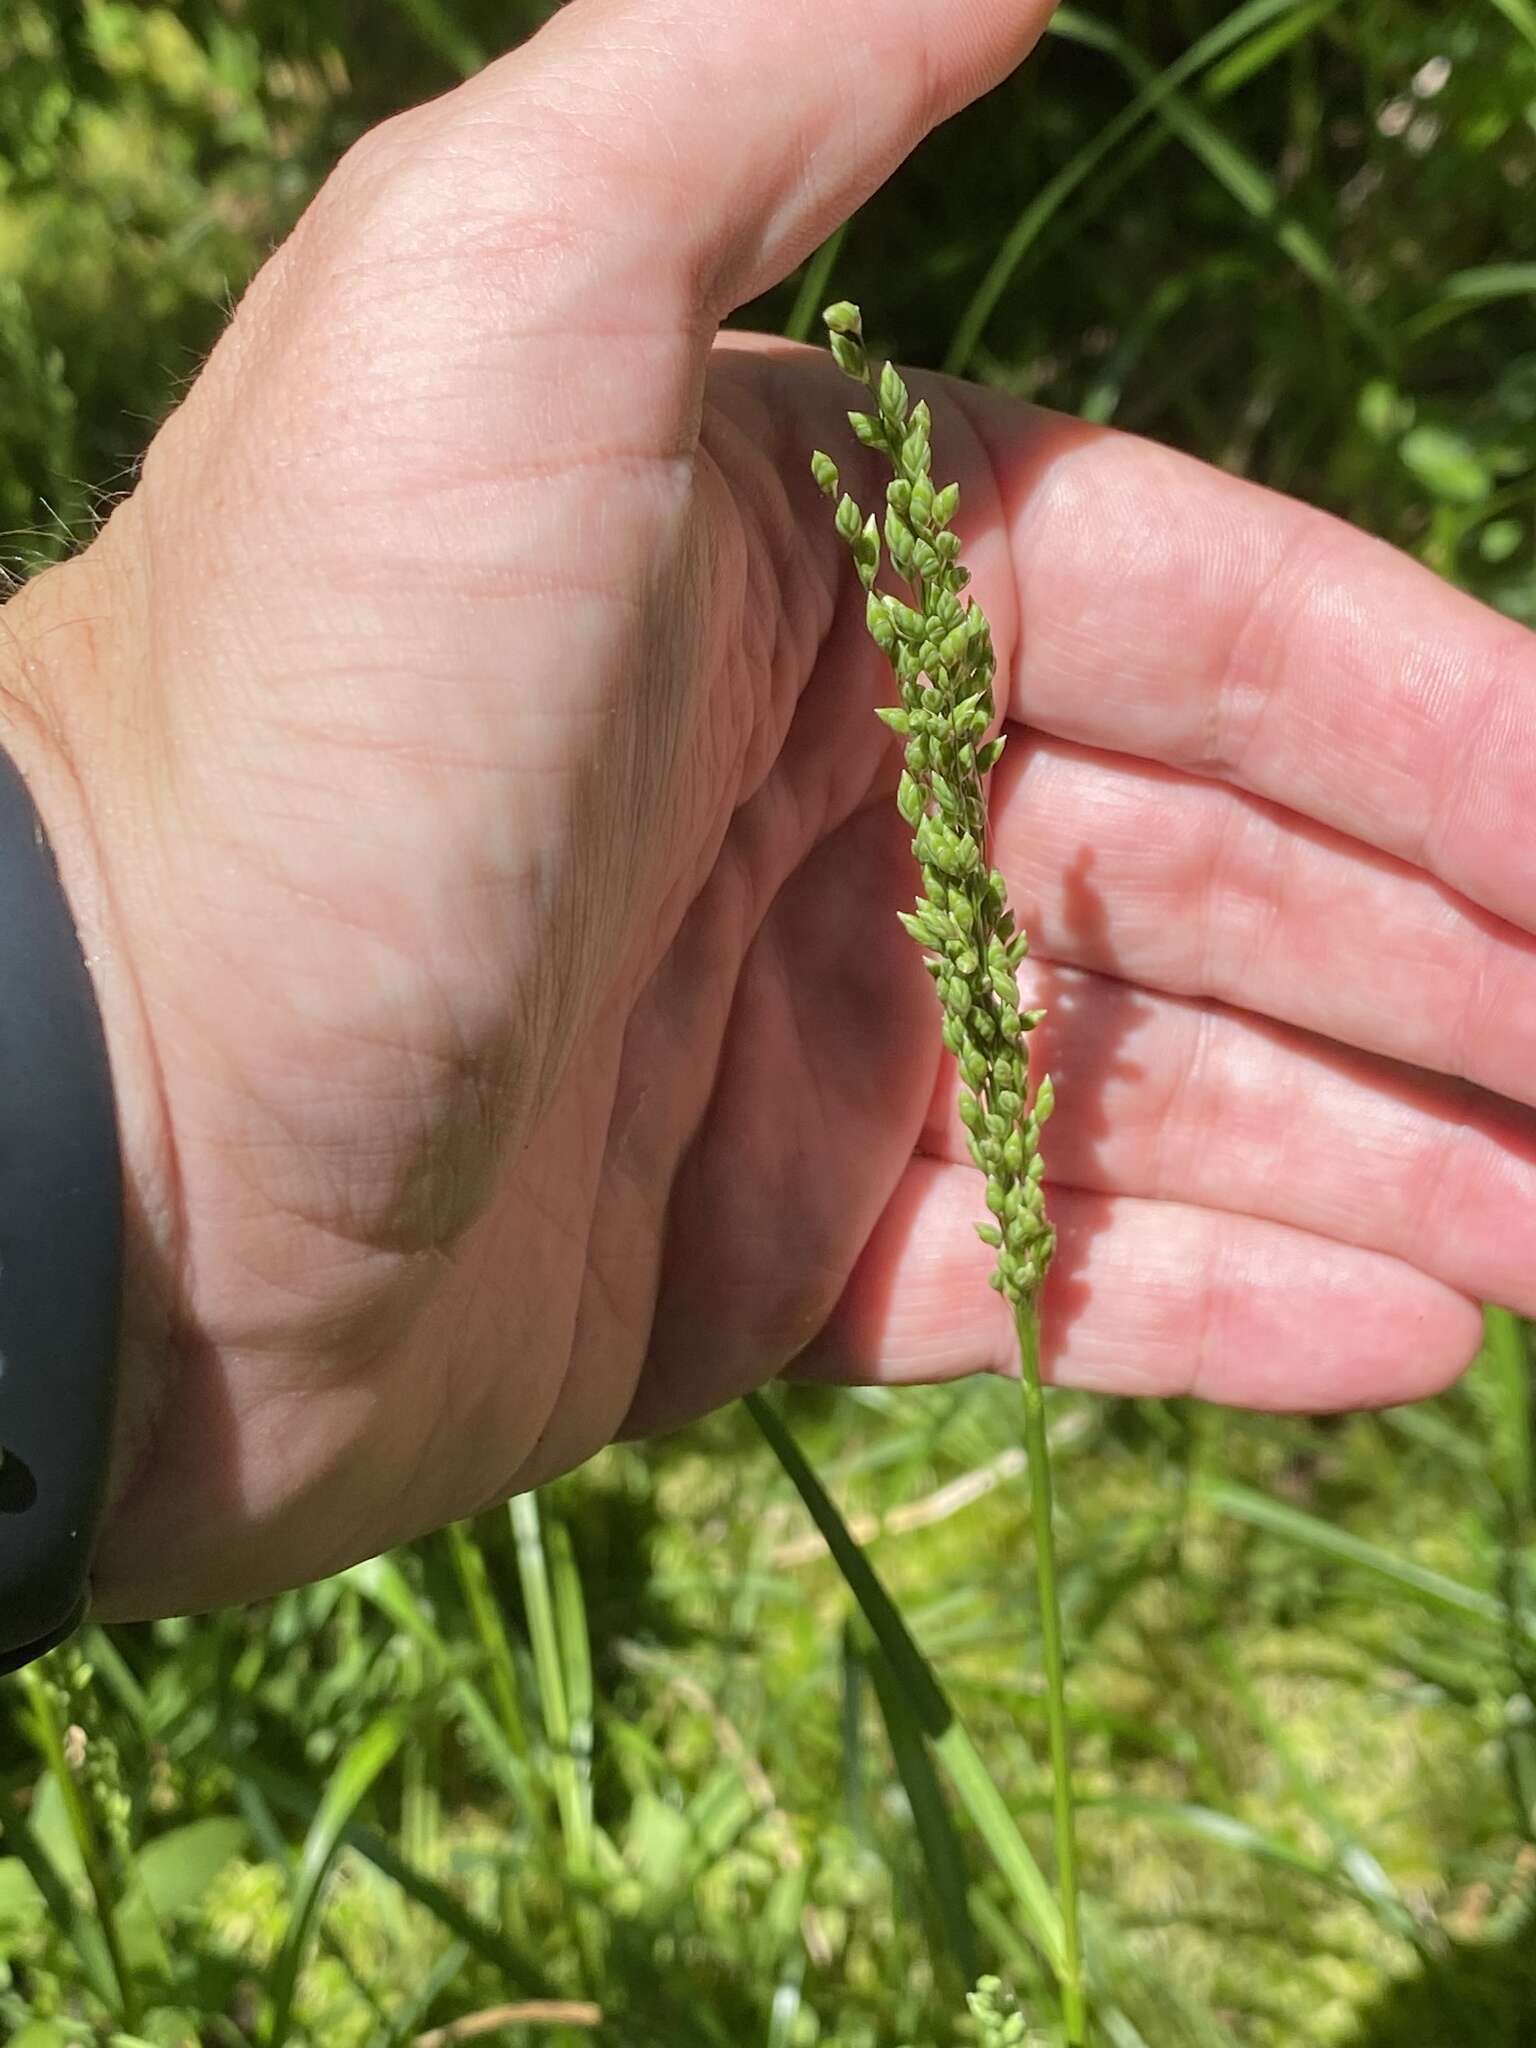 Image of Atlantic Manna Grass